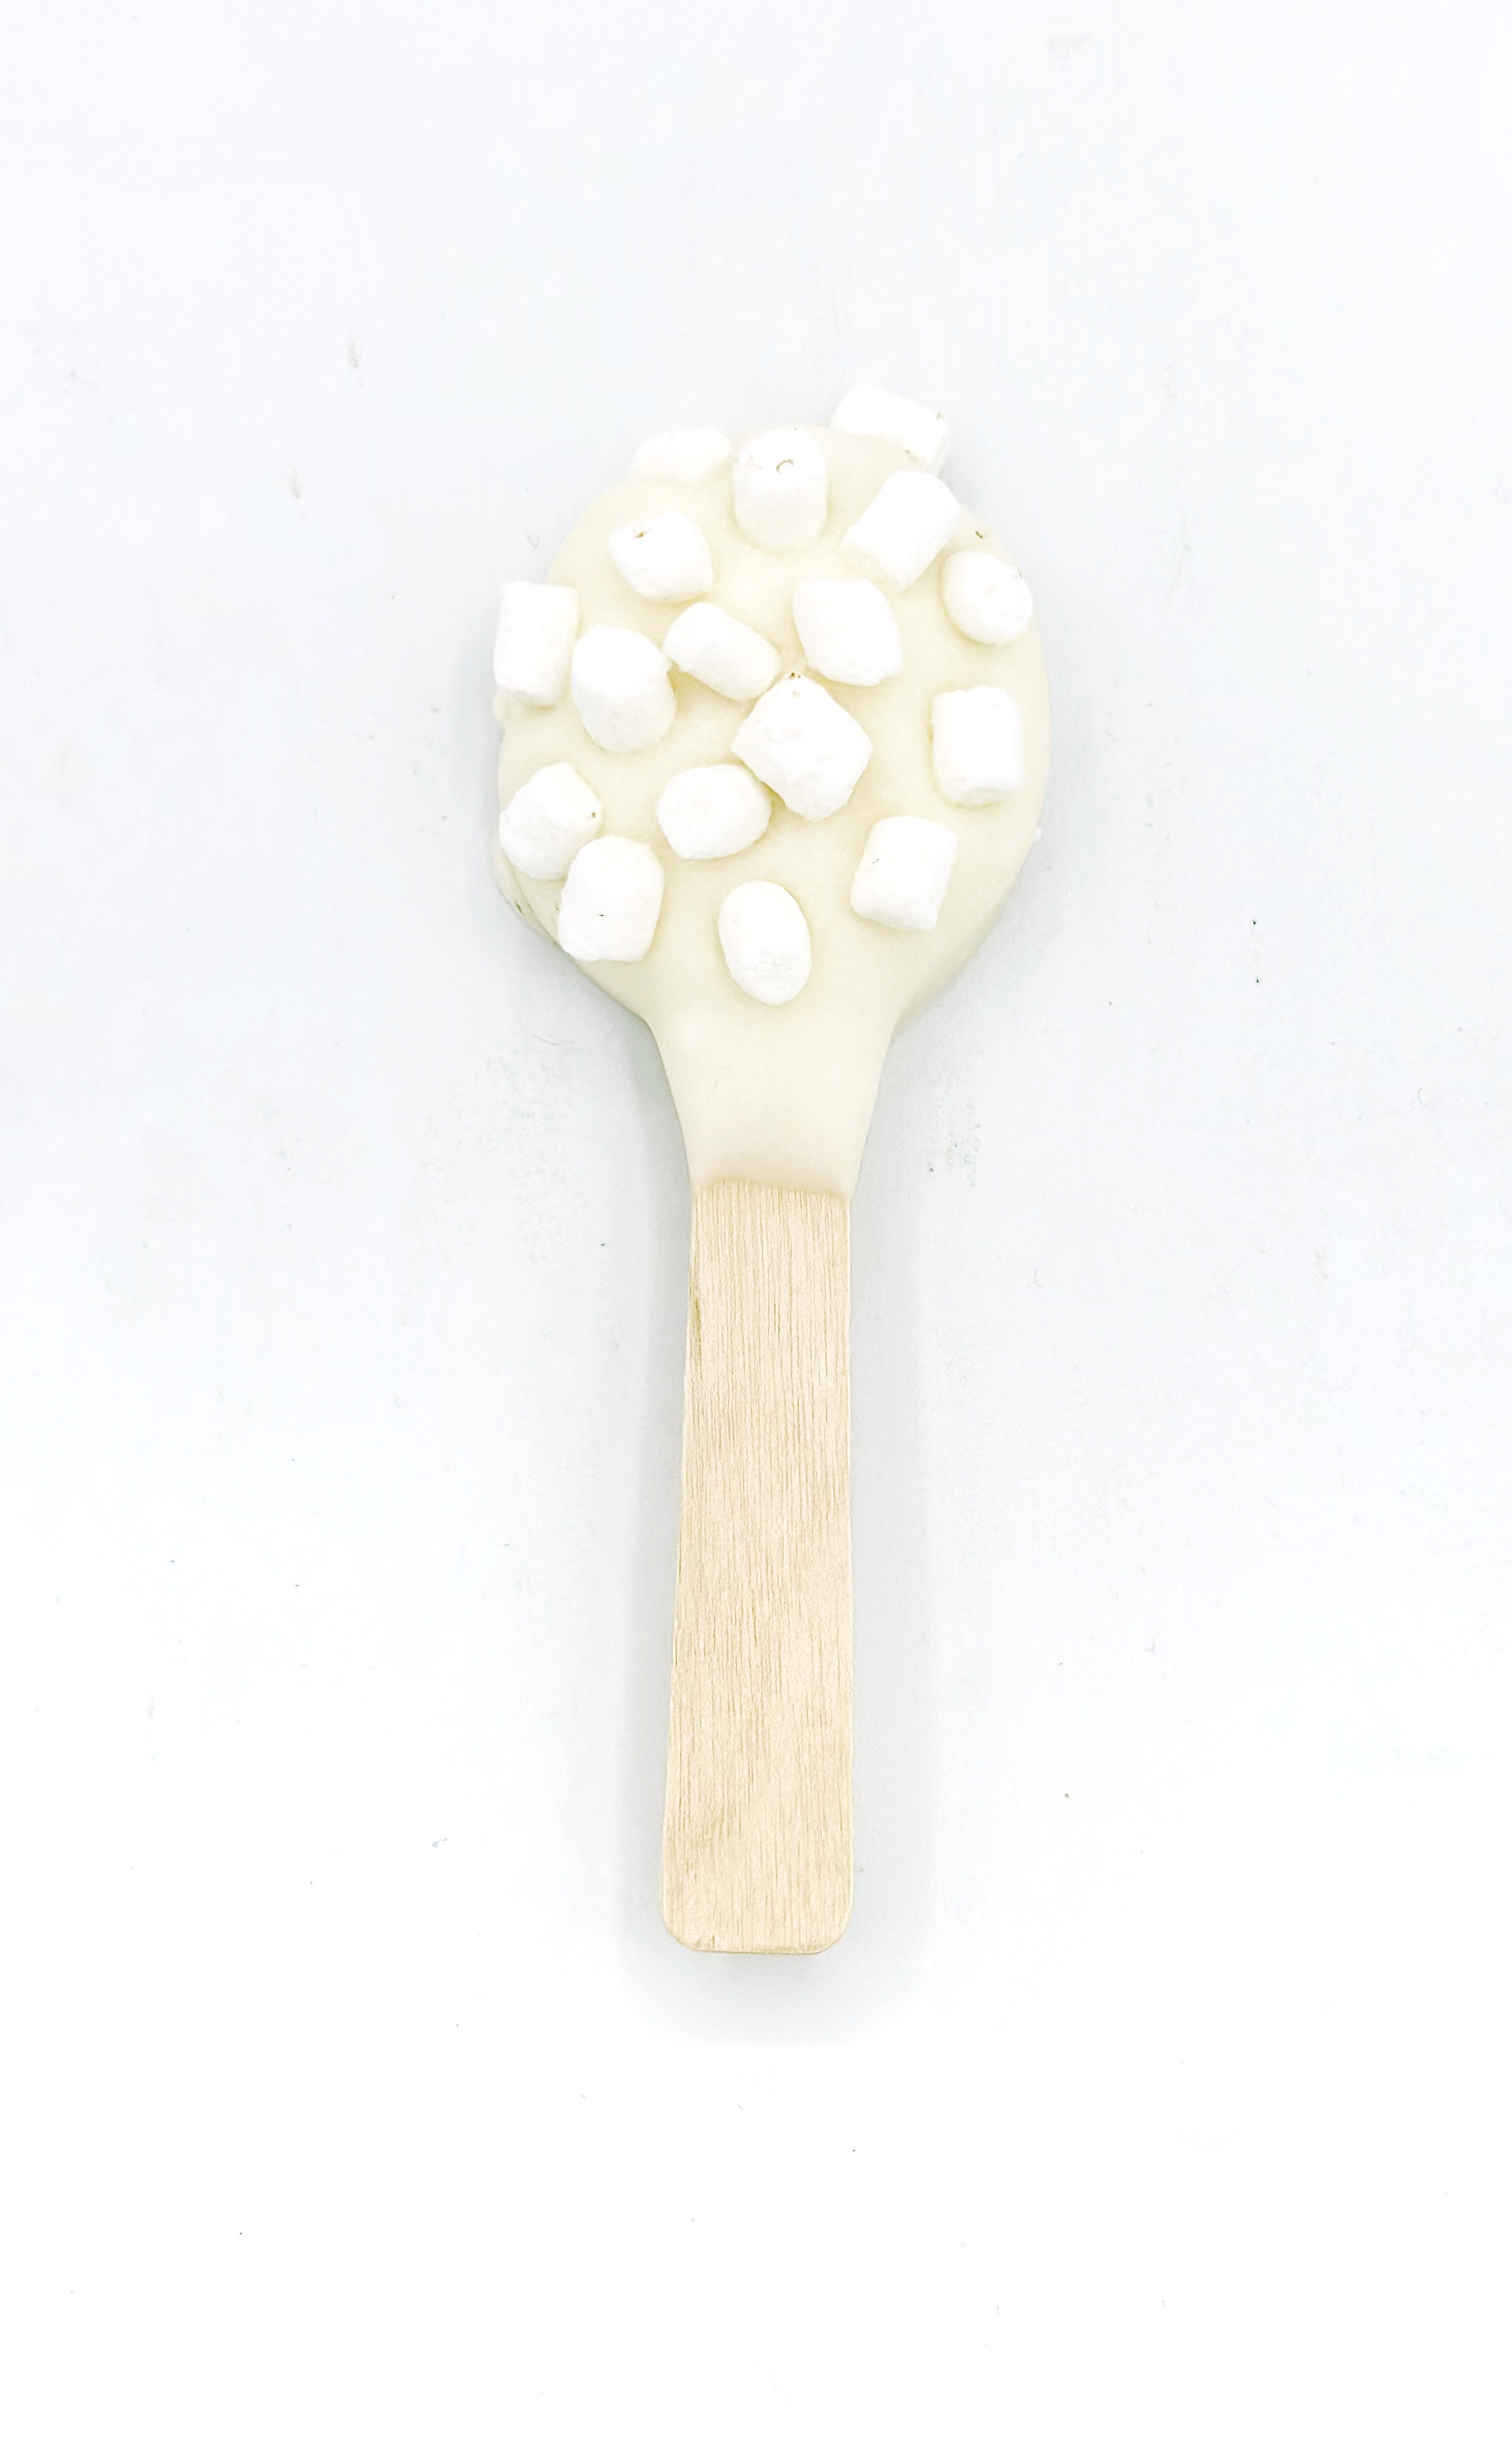 White chocolate spoon